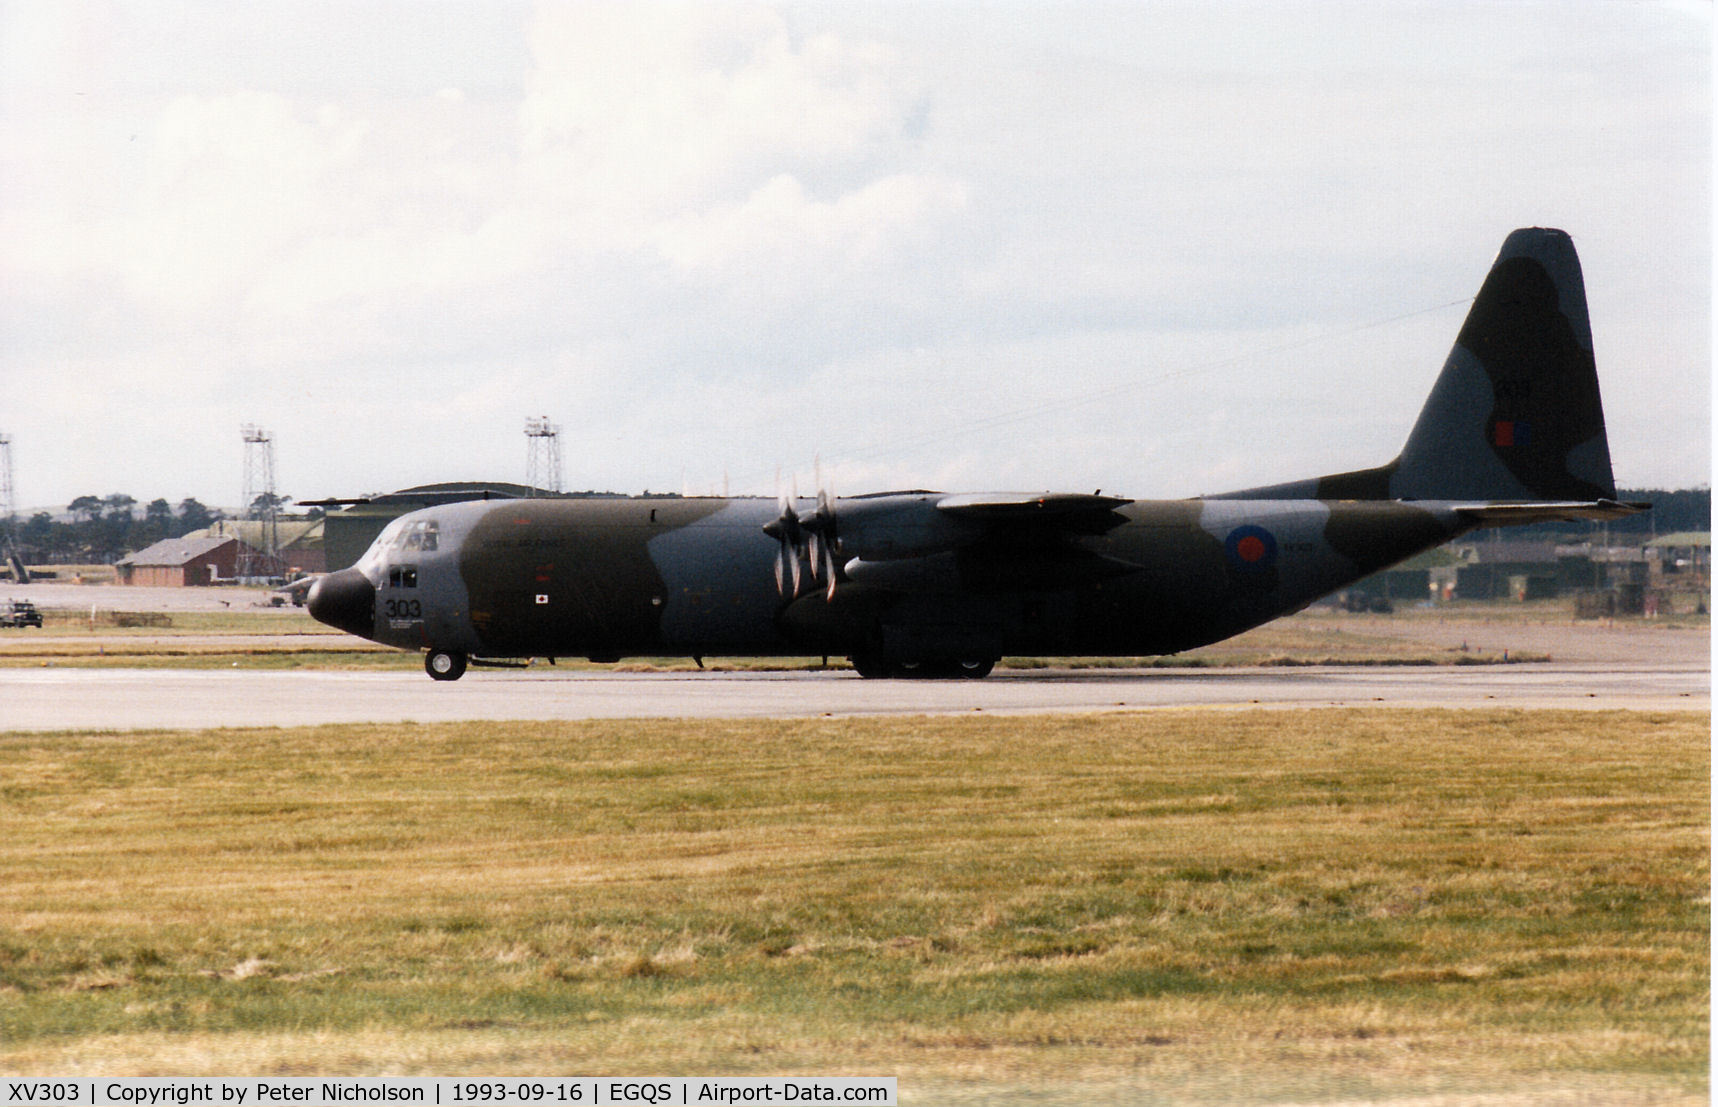 XV303, 1967 Lockheed C-130K Hercules C.3 C/N 382-4271, Hercules C.3, callsign Romeo Zero Four, of the Lyneham Transport Wing preparing to depart from RAF Lossiemouth in September 1993.